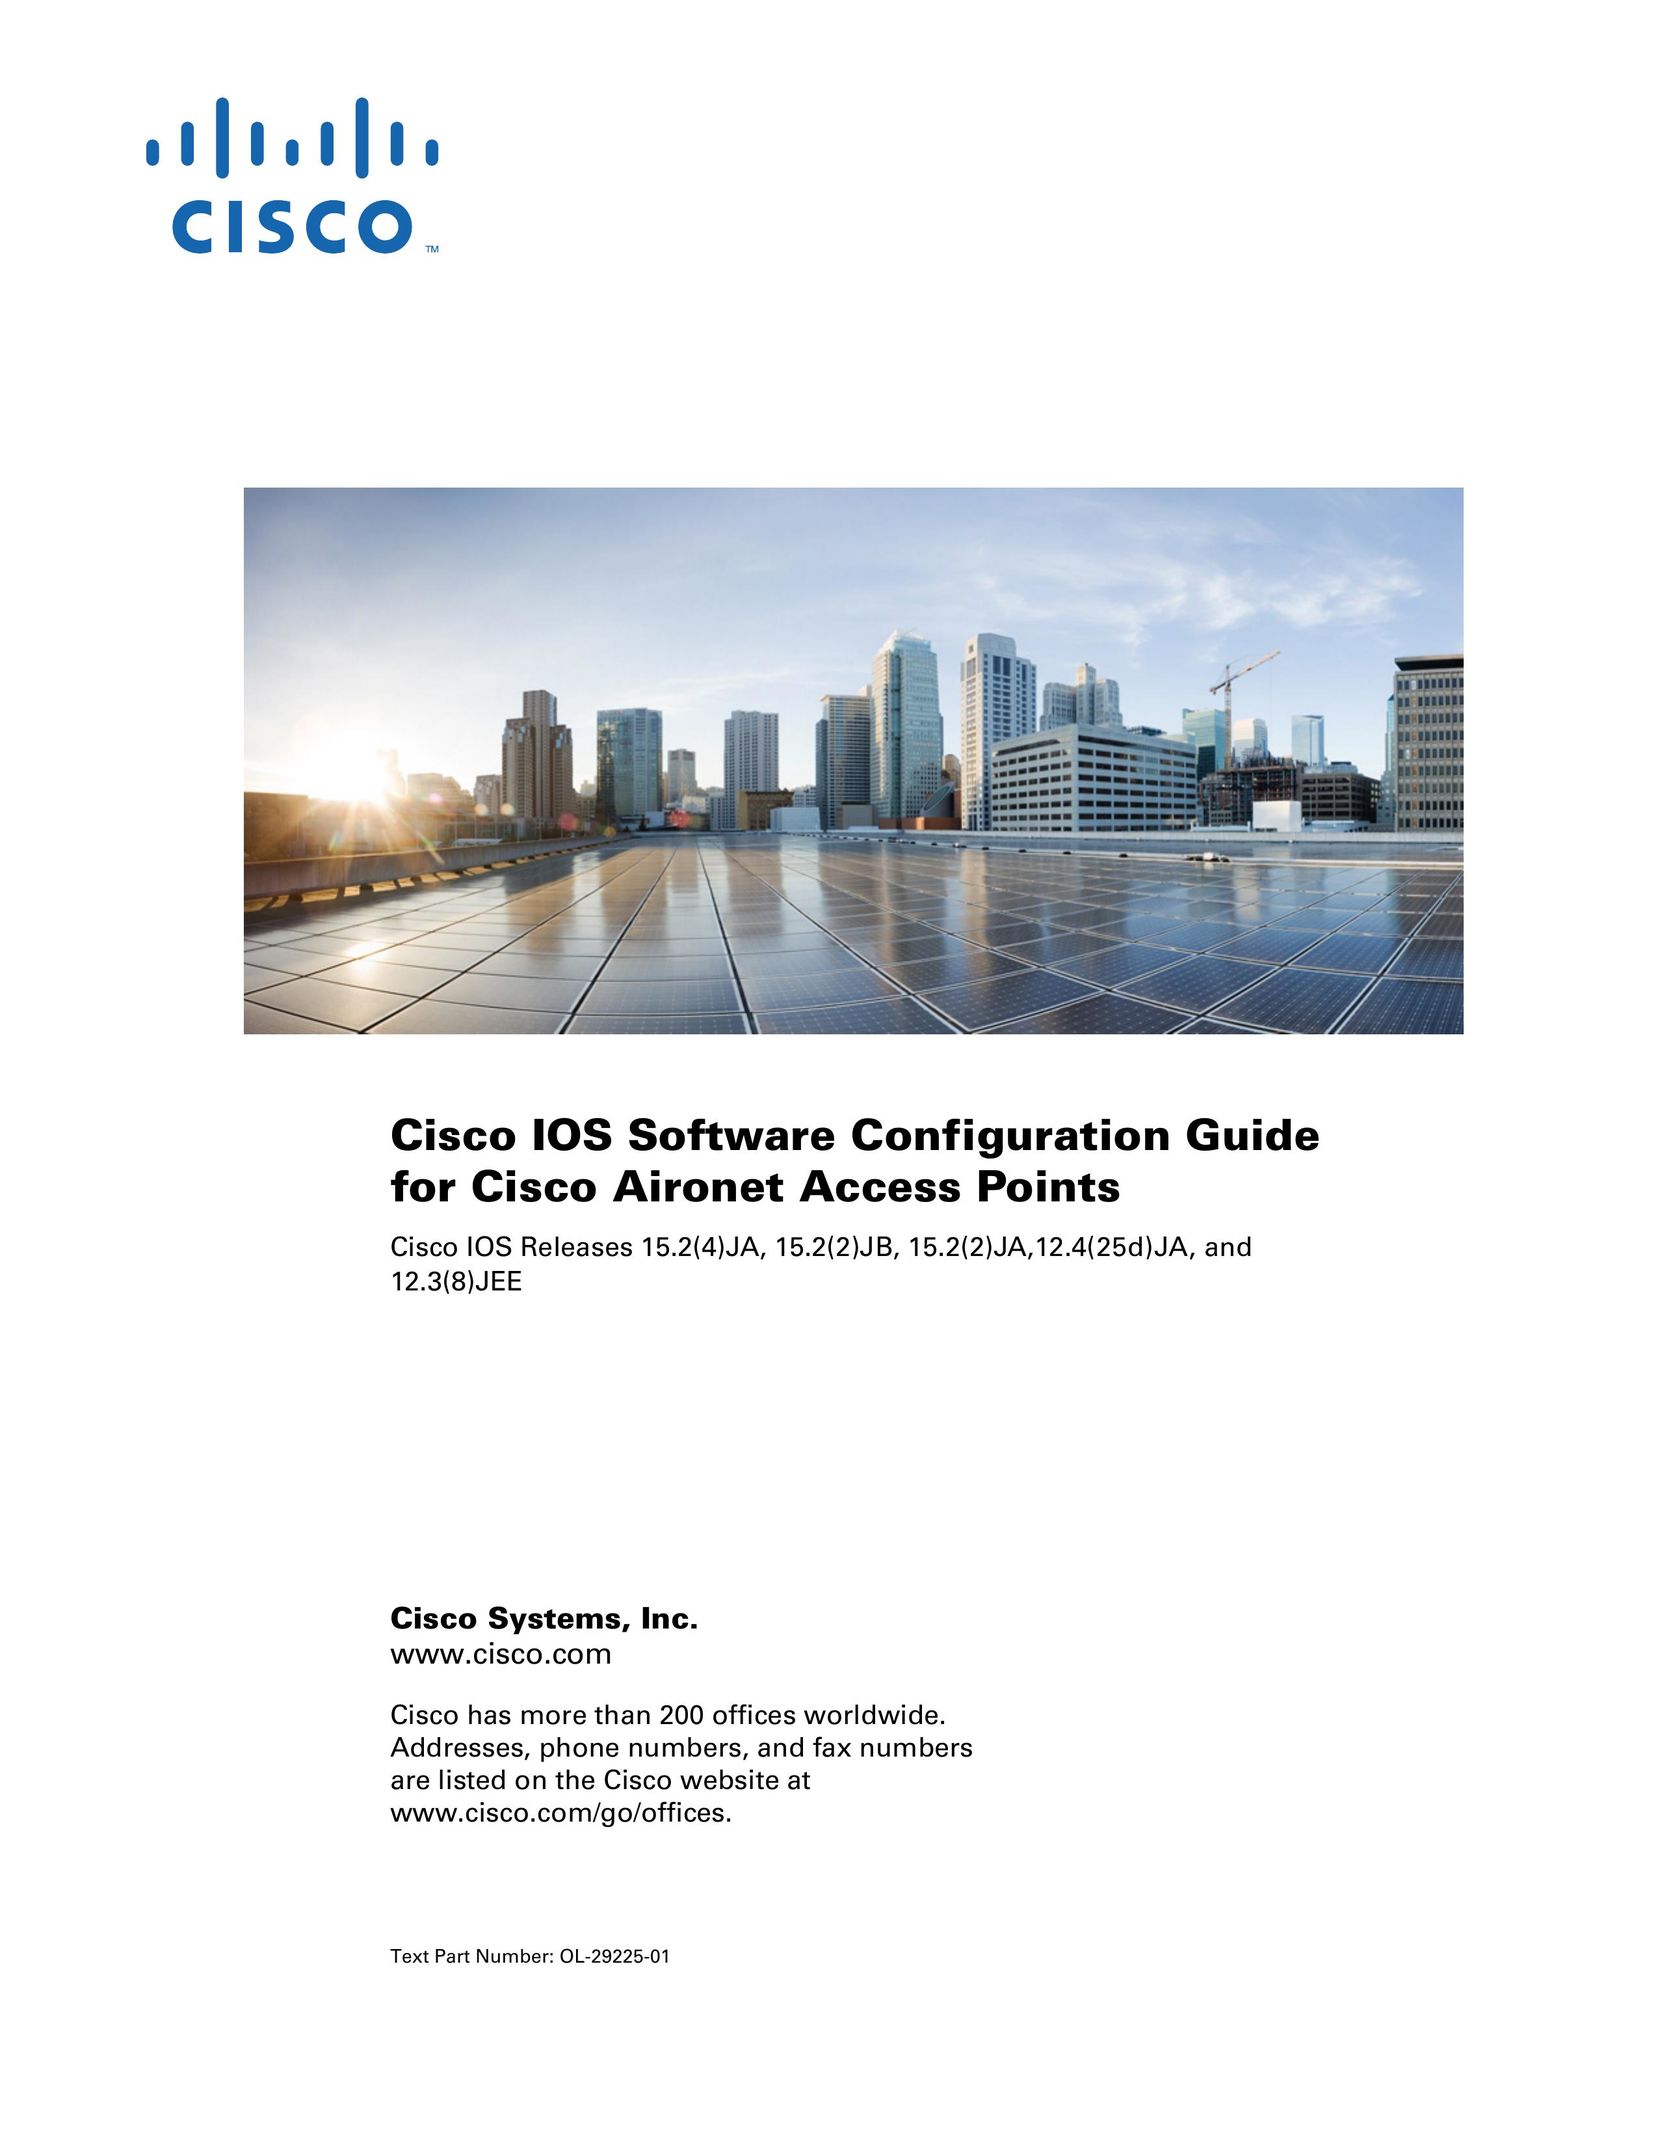 Cisco Systems 12.4(25d)JA Universal Remote User Manual